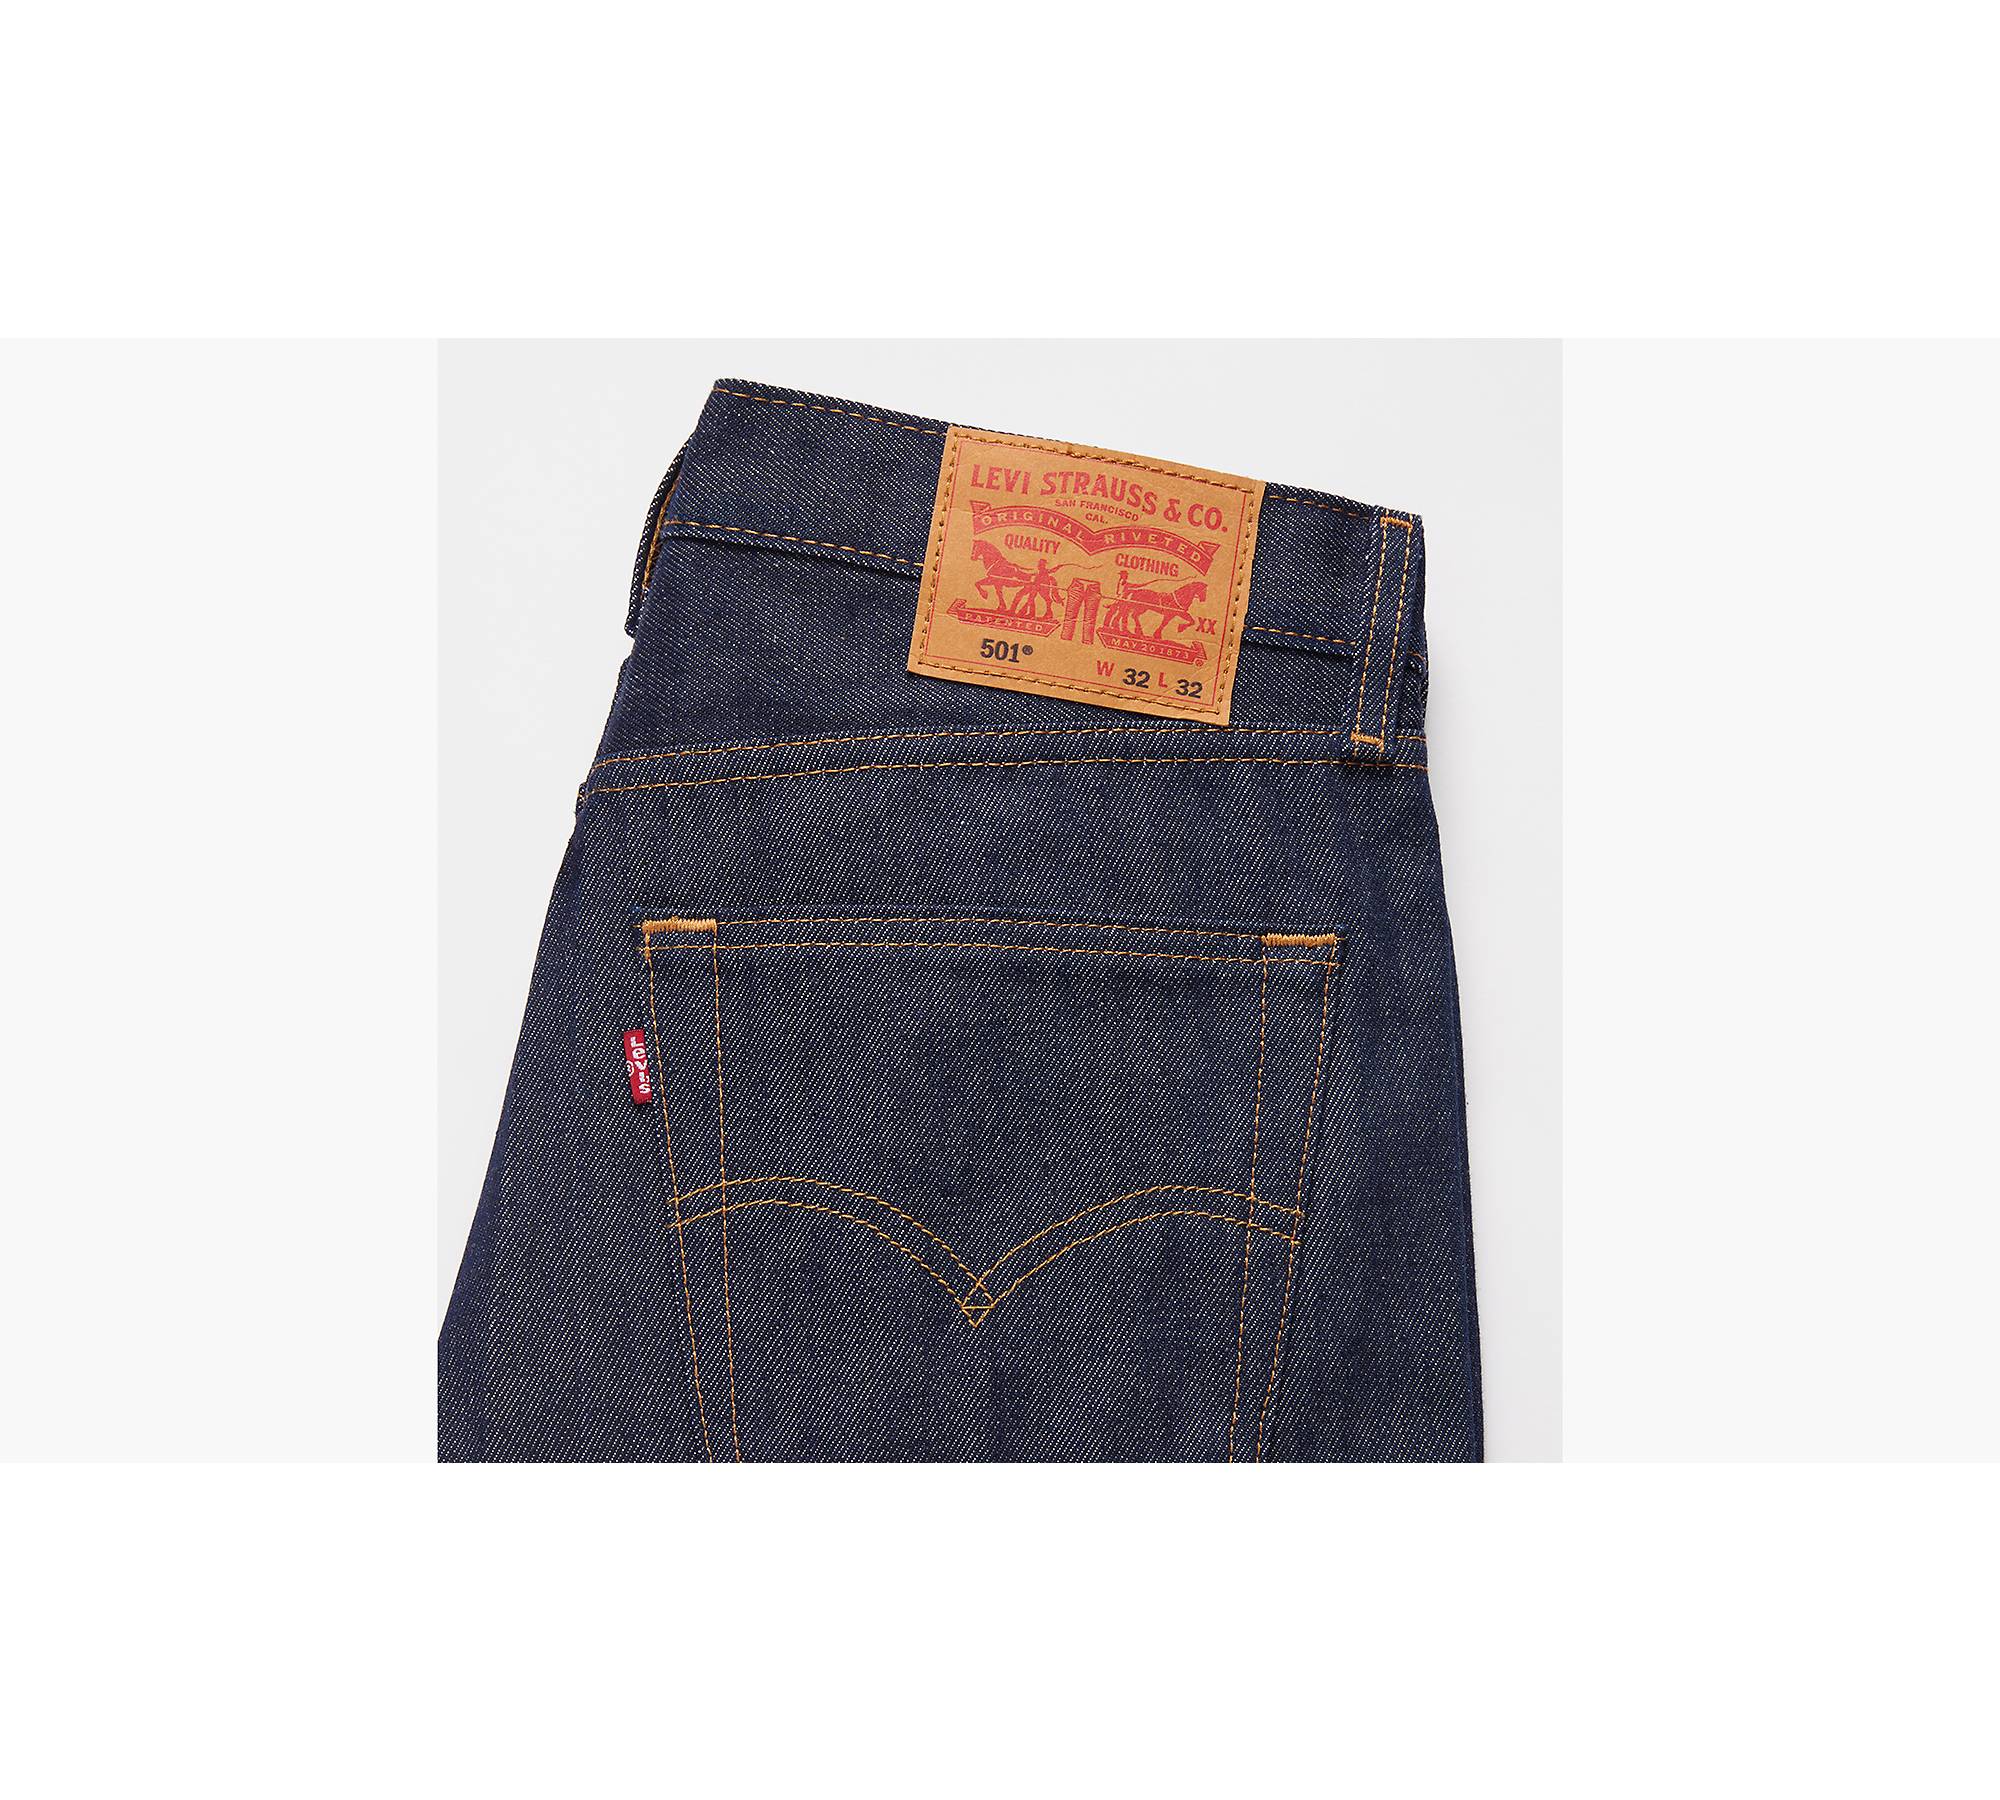 Product Name: Levi's Men's 501 Original Shrink-to-Fit Regular Straight Leg  Jeans